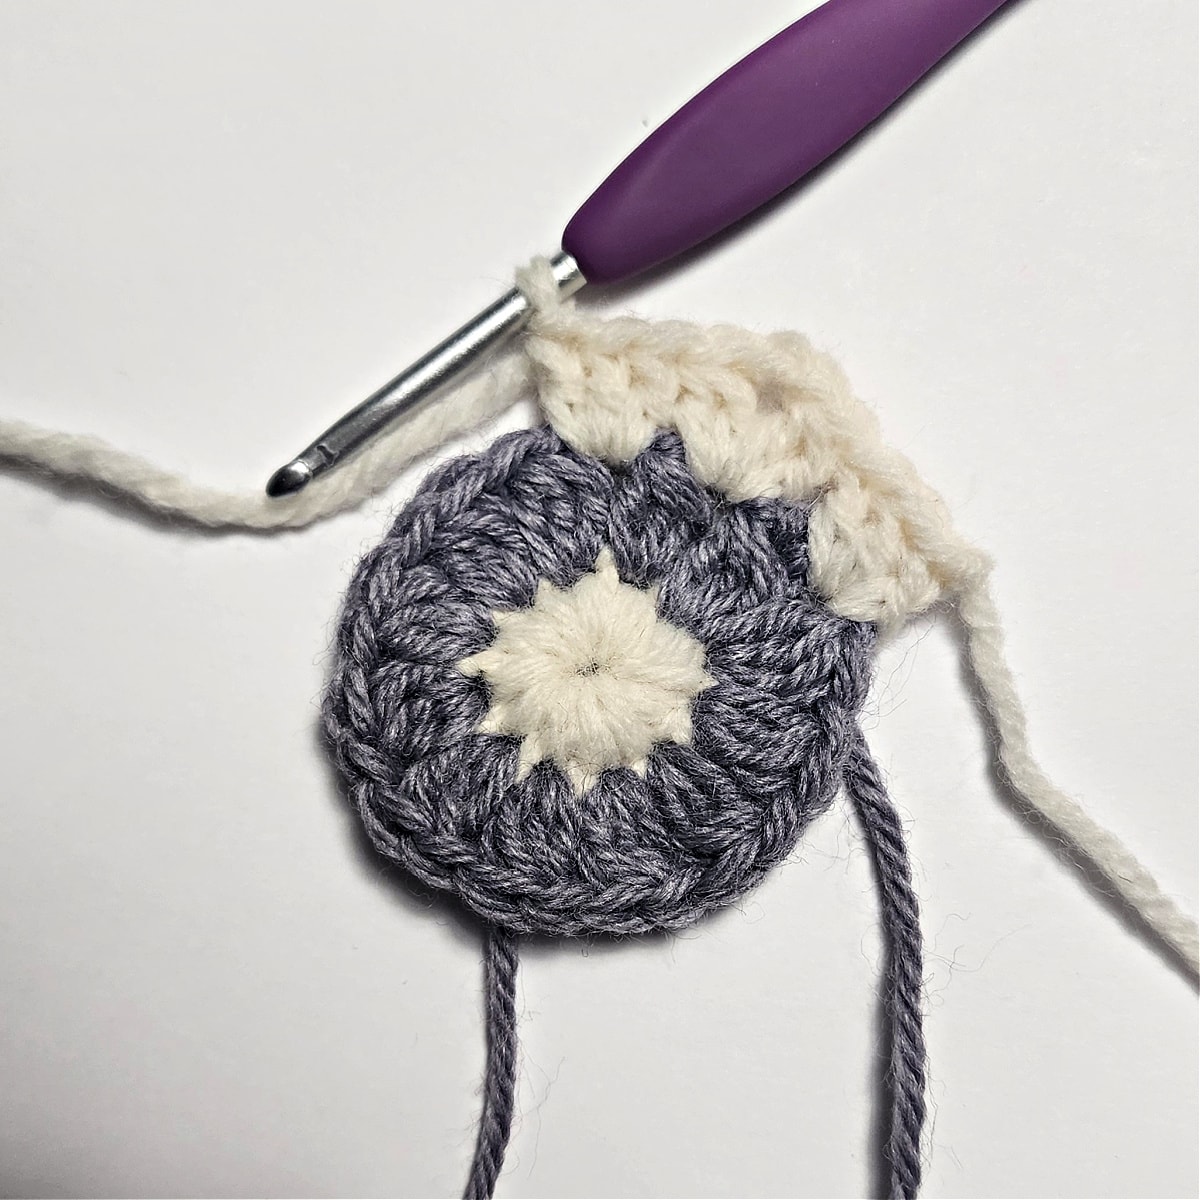 Cream and purple hexagon crochet motif being made.